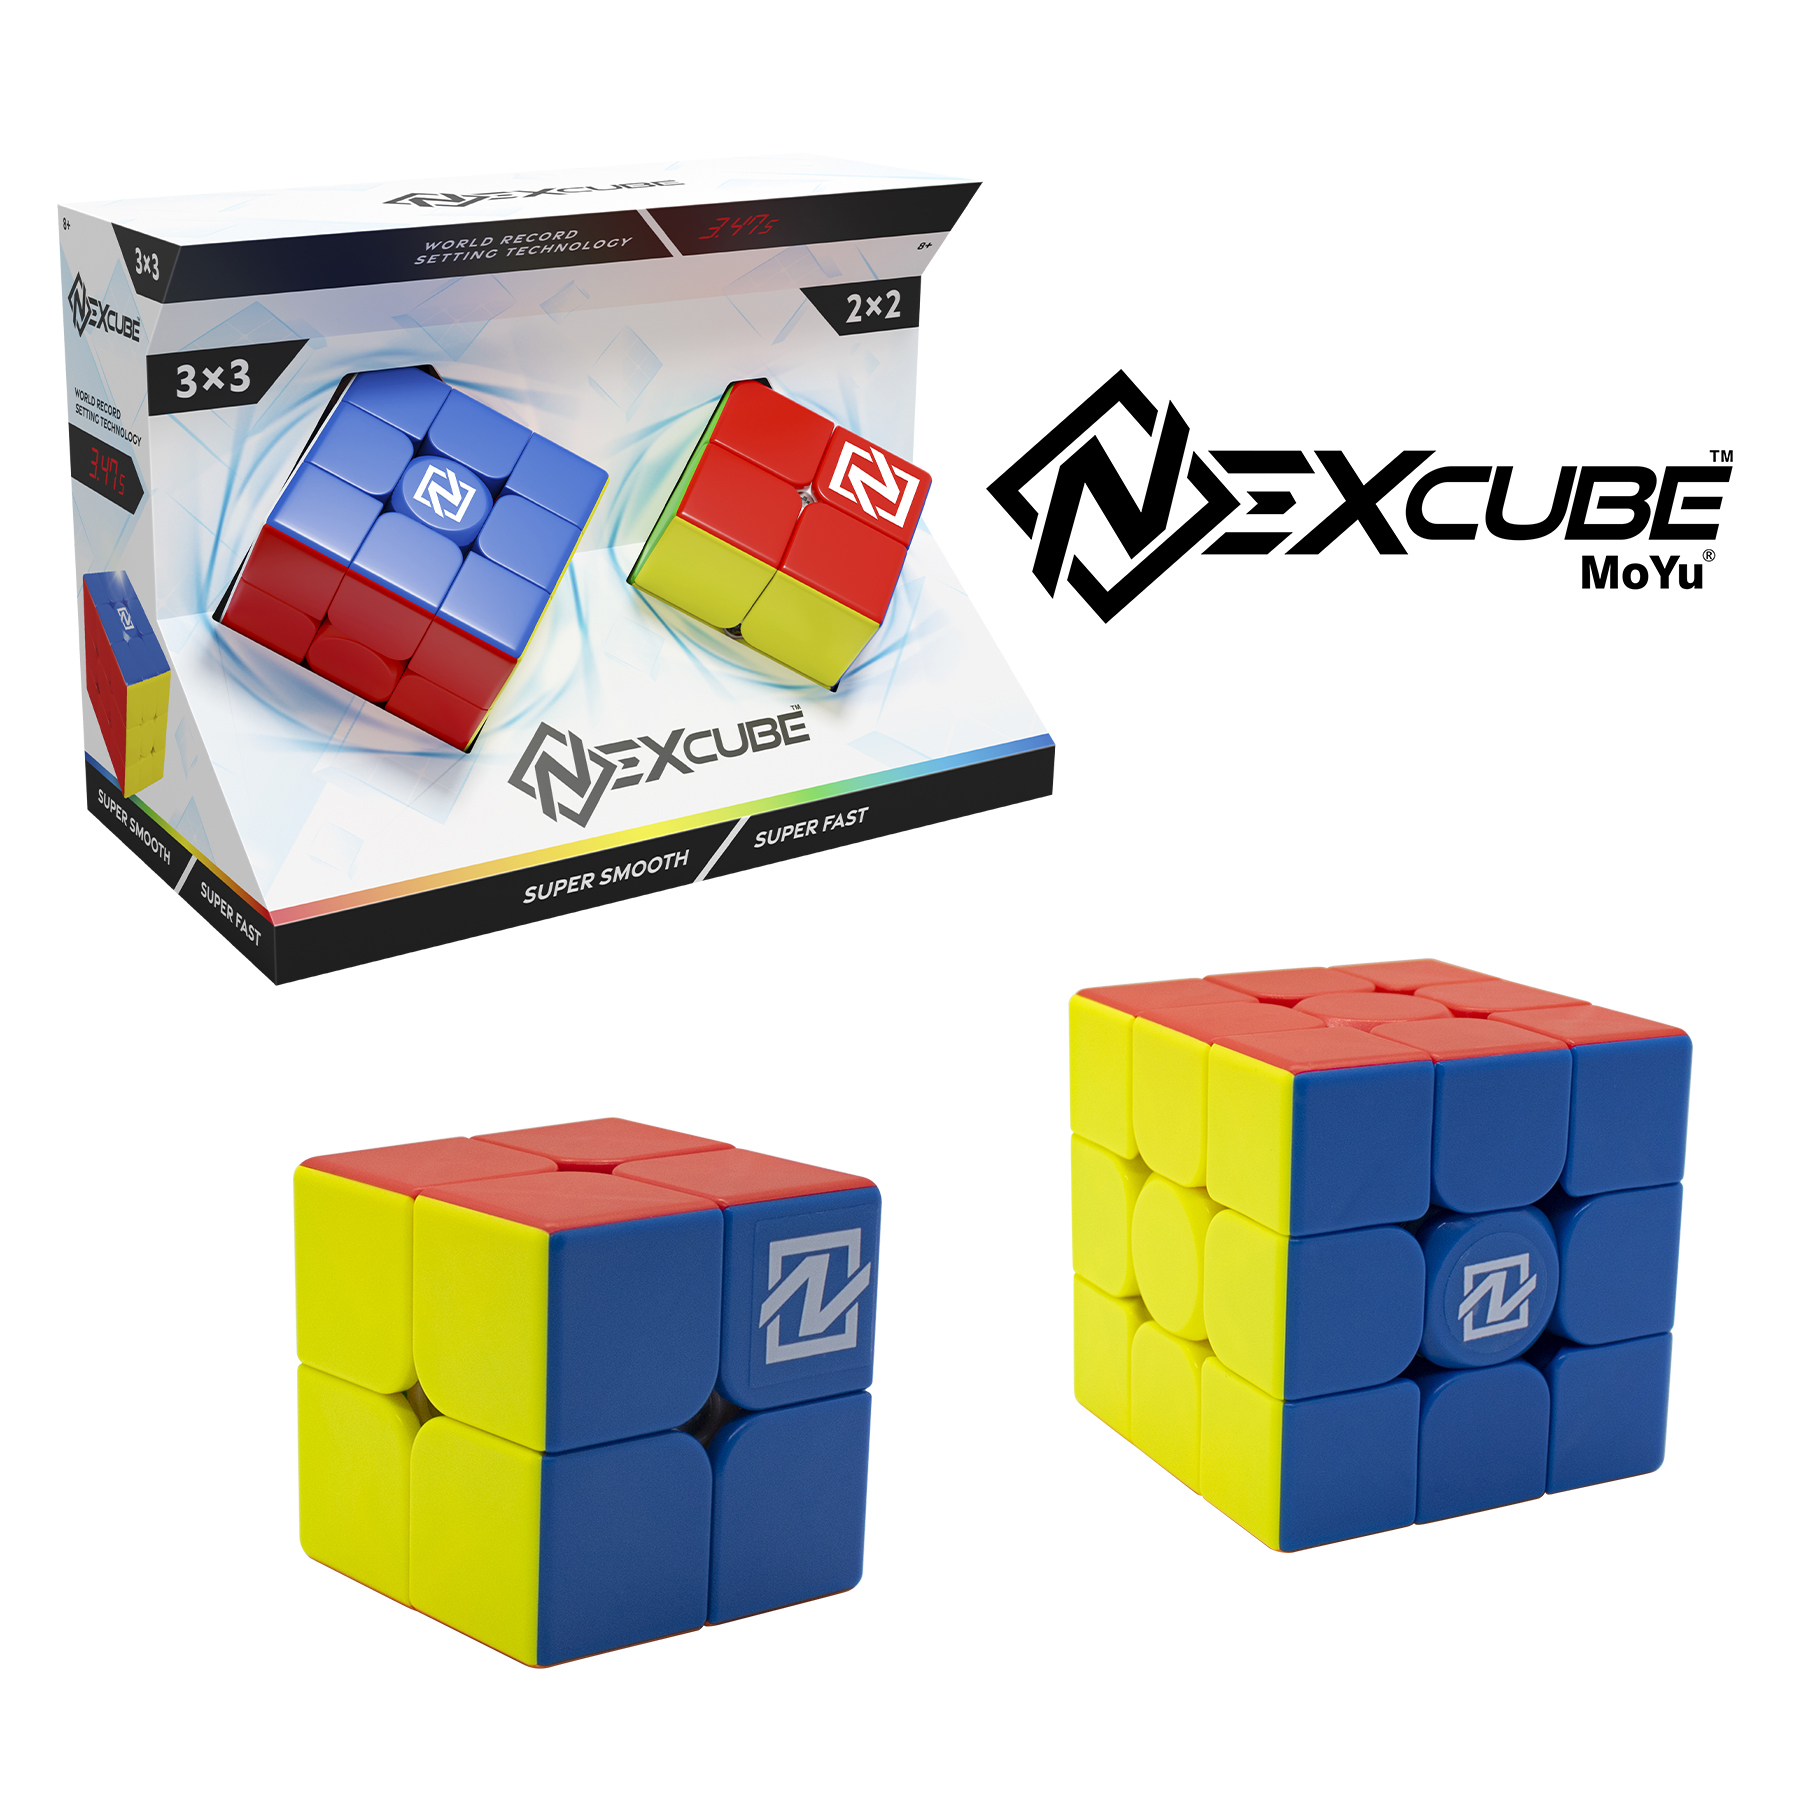 nexcube 3x3 + 2x2 clasico (goliath - 919903)